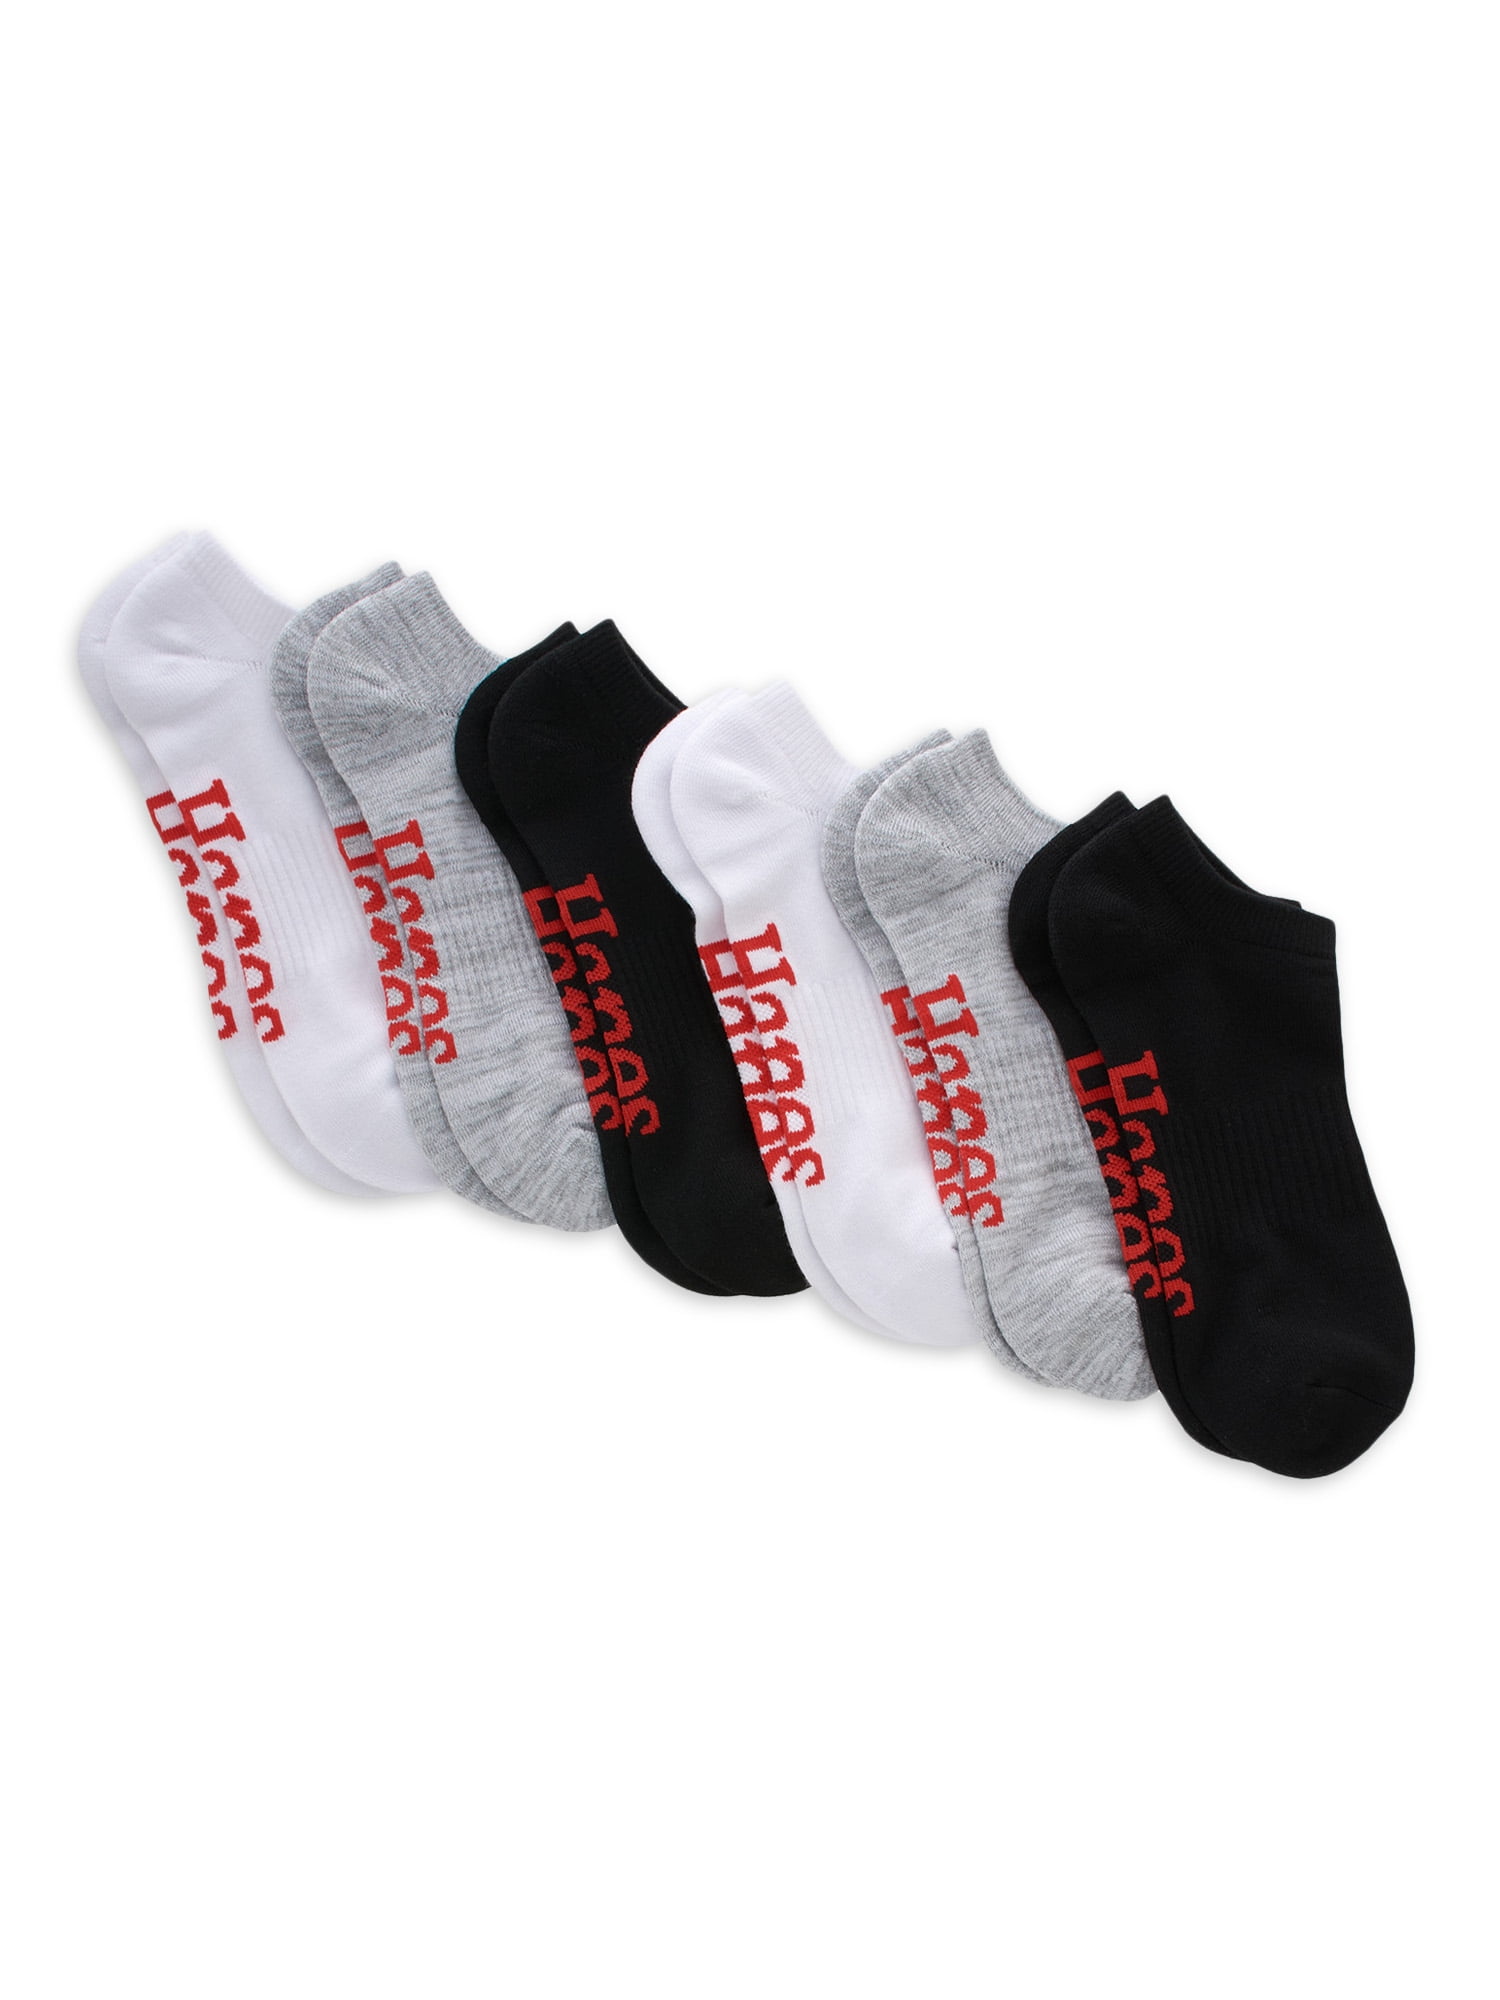 Hanes Originals Men's No-Show Socks, Moisture Wicking, 6-Pair Pack ...